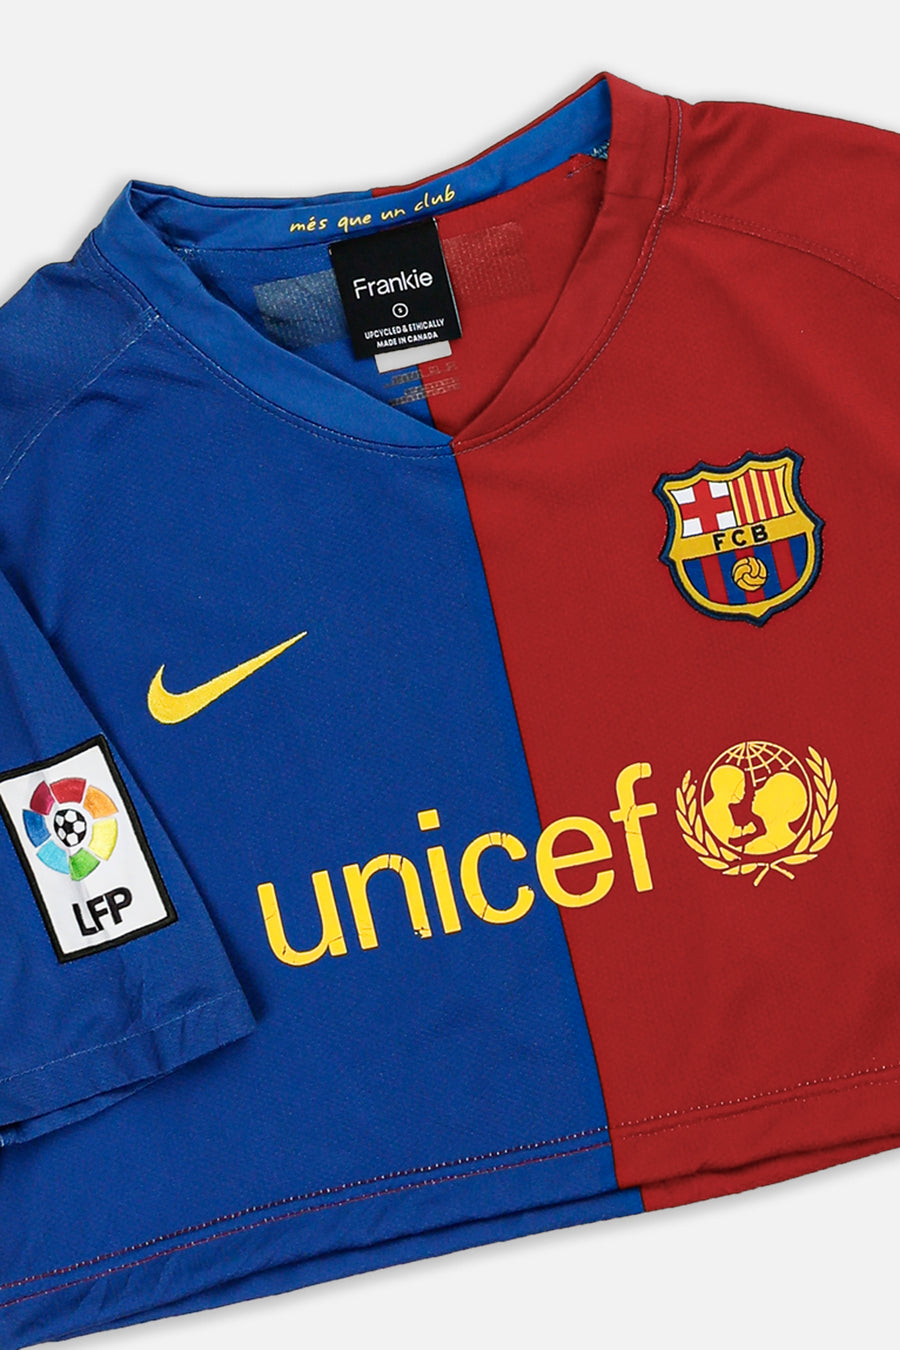 Rework Crop Barcelona Soccer Jersey - S